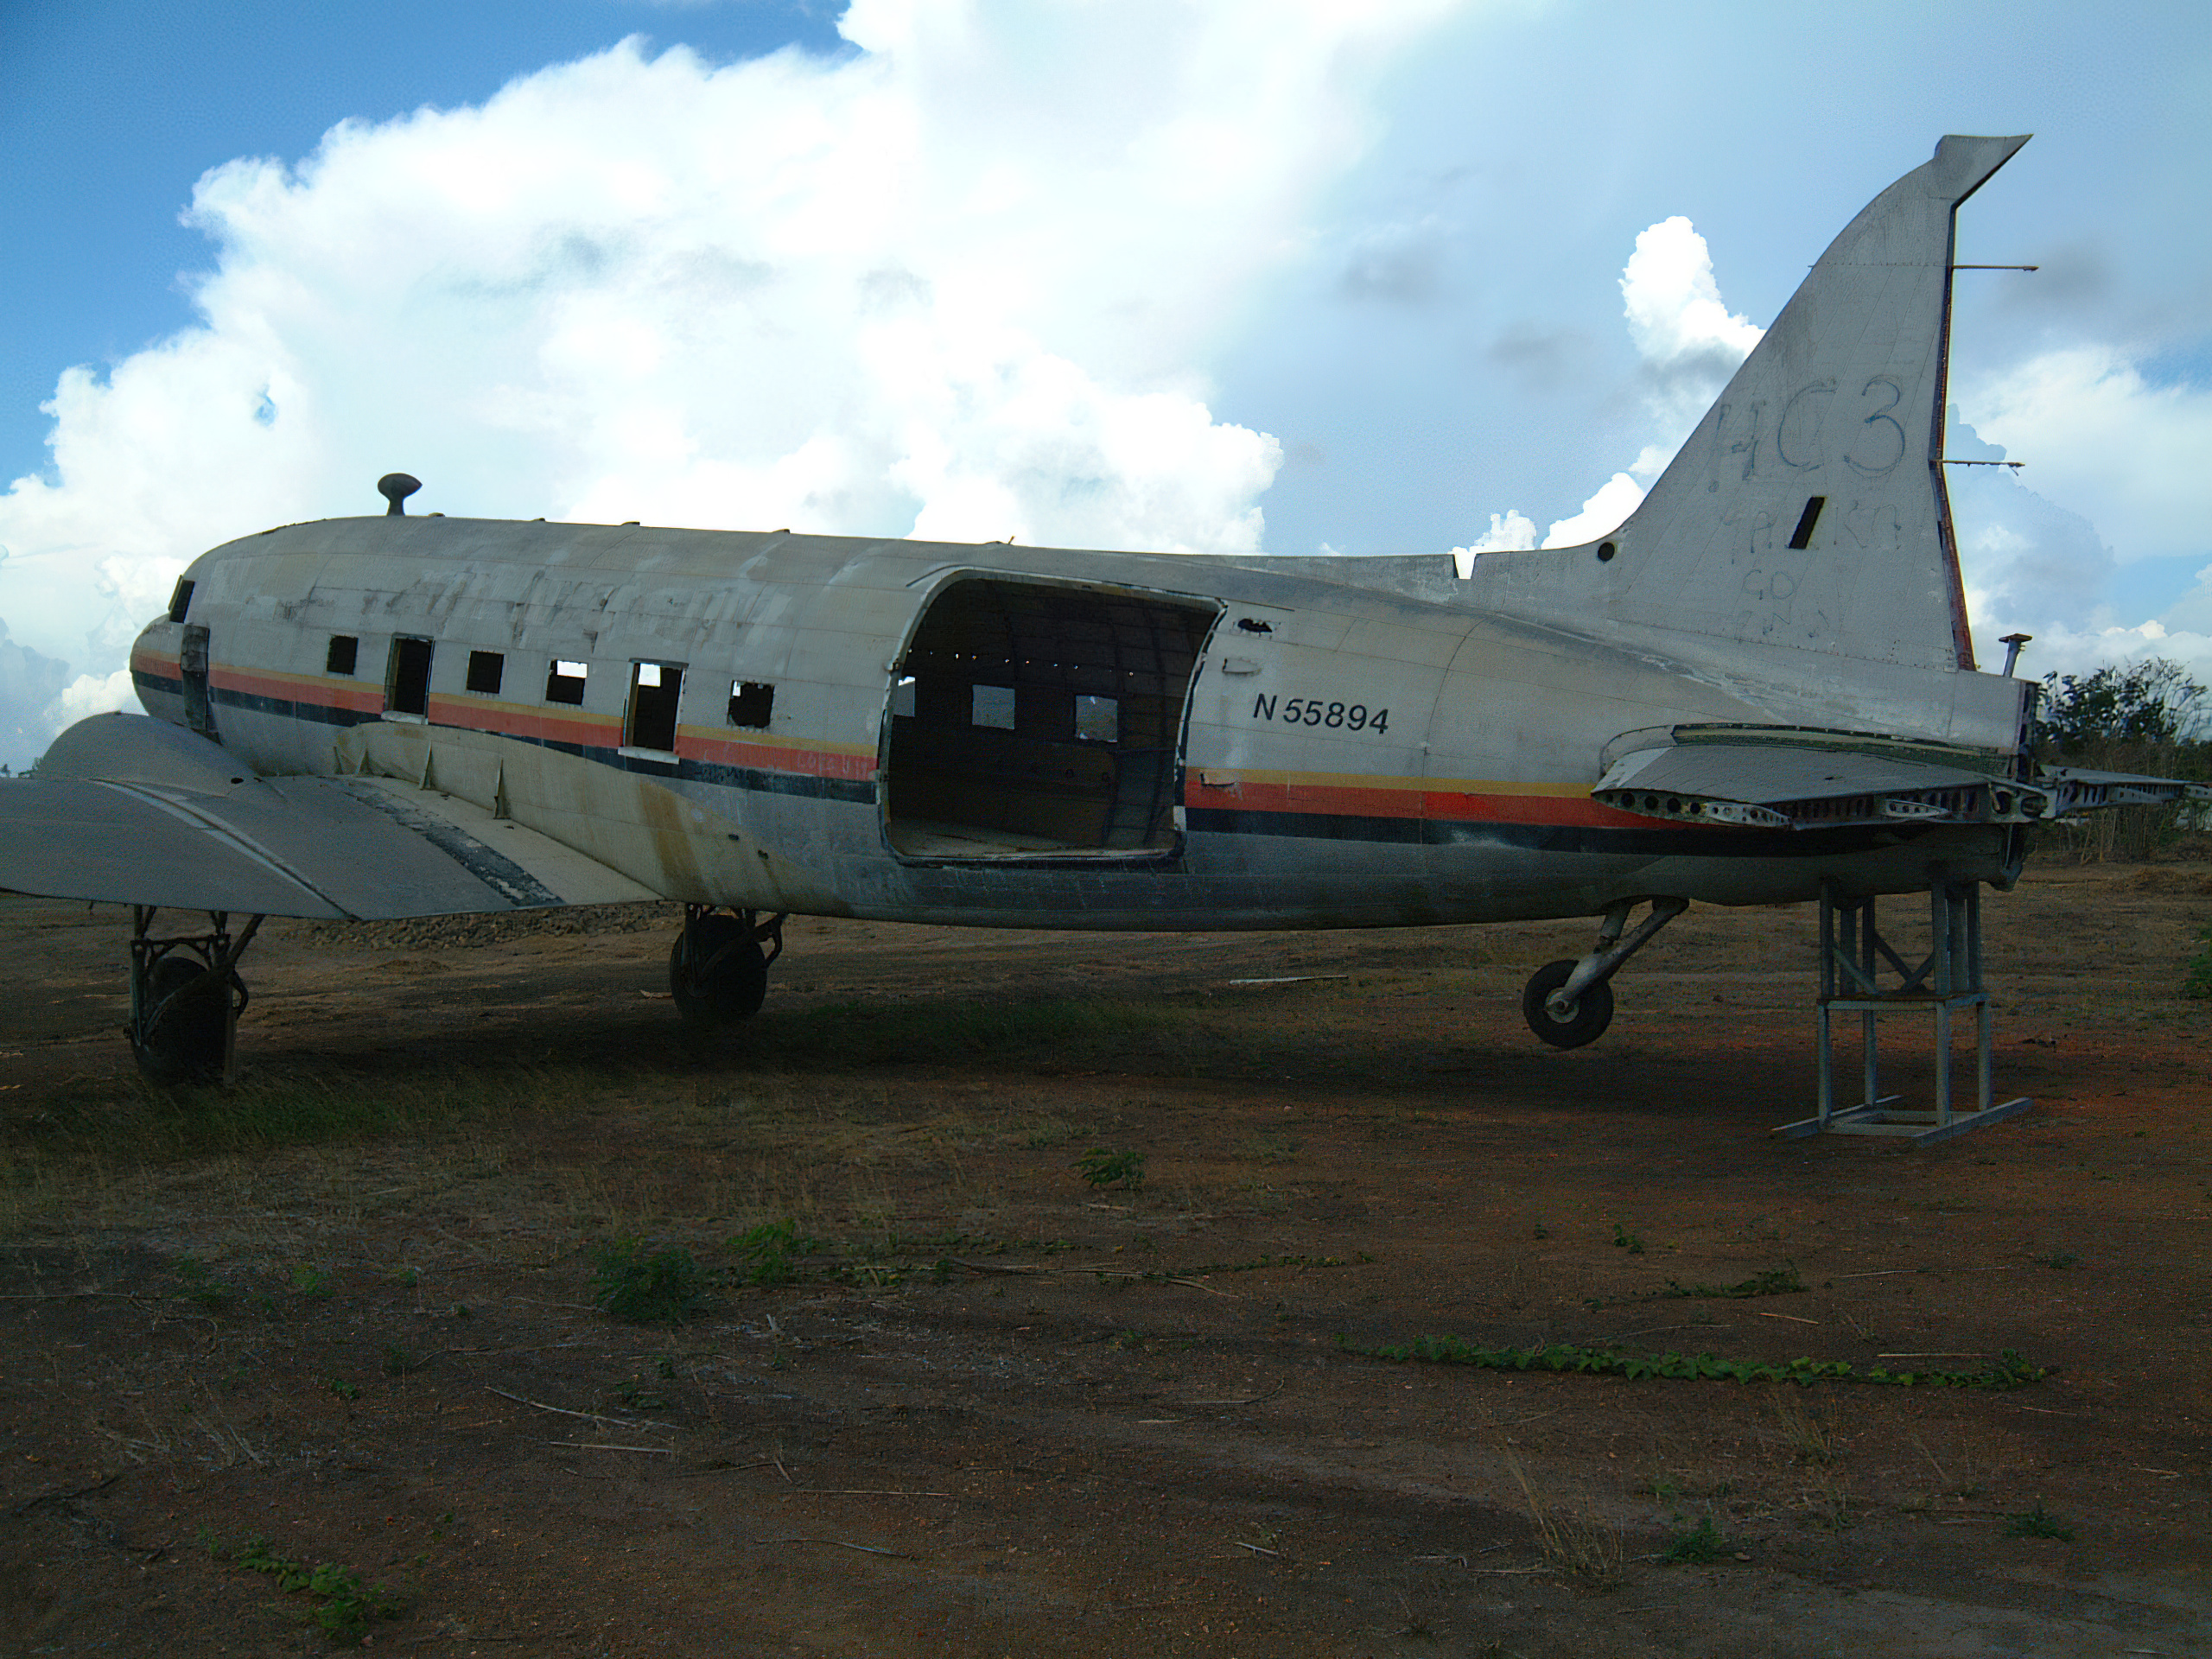 Abandoned Douglas C 47 Dakota Air New Guinea N55894 aircraft at Port Moresby PNG 29th Sep 2002 02